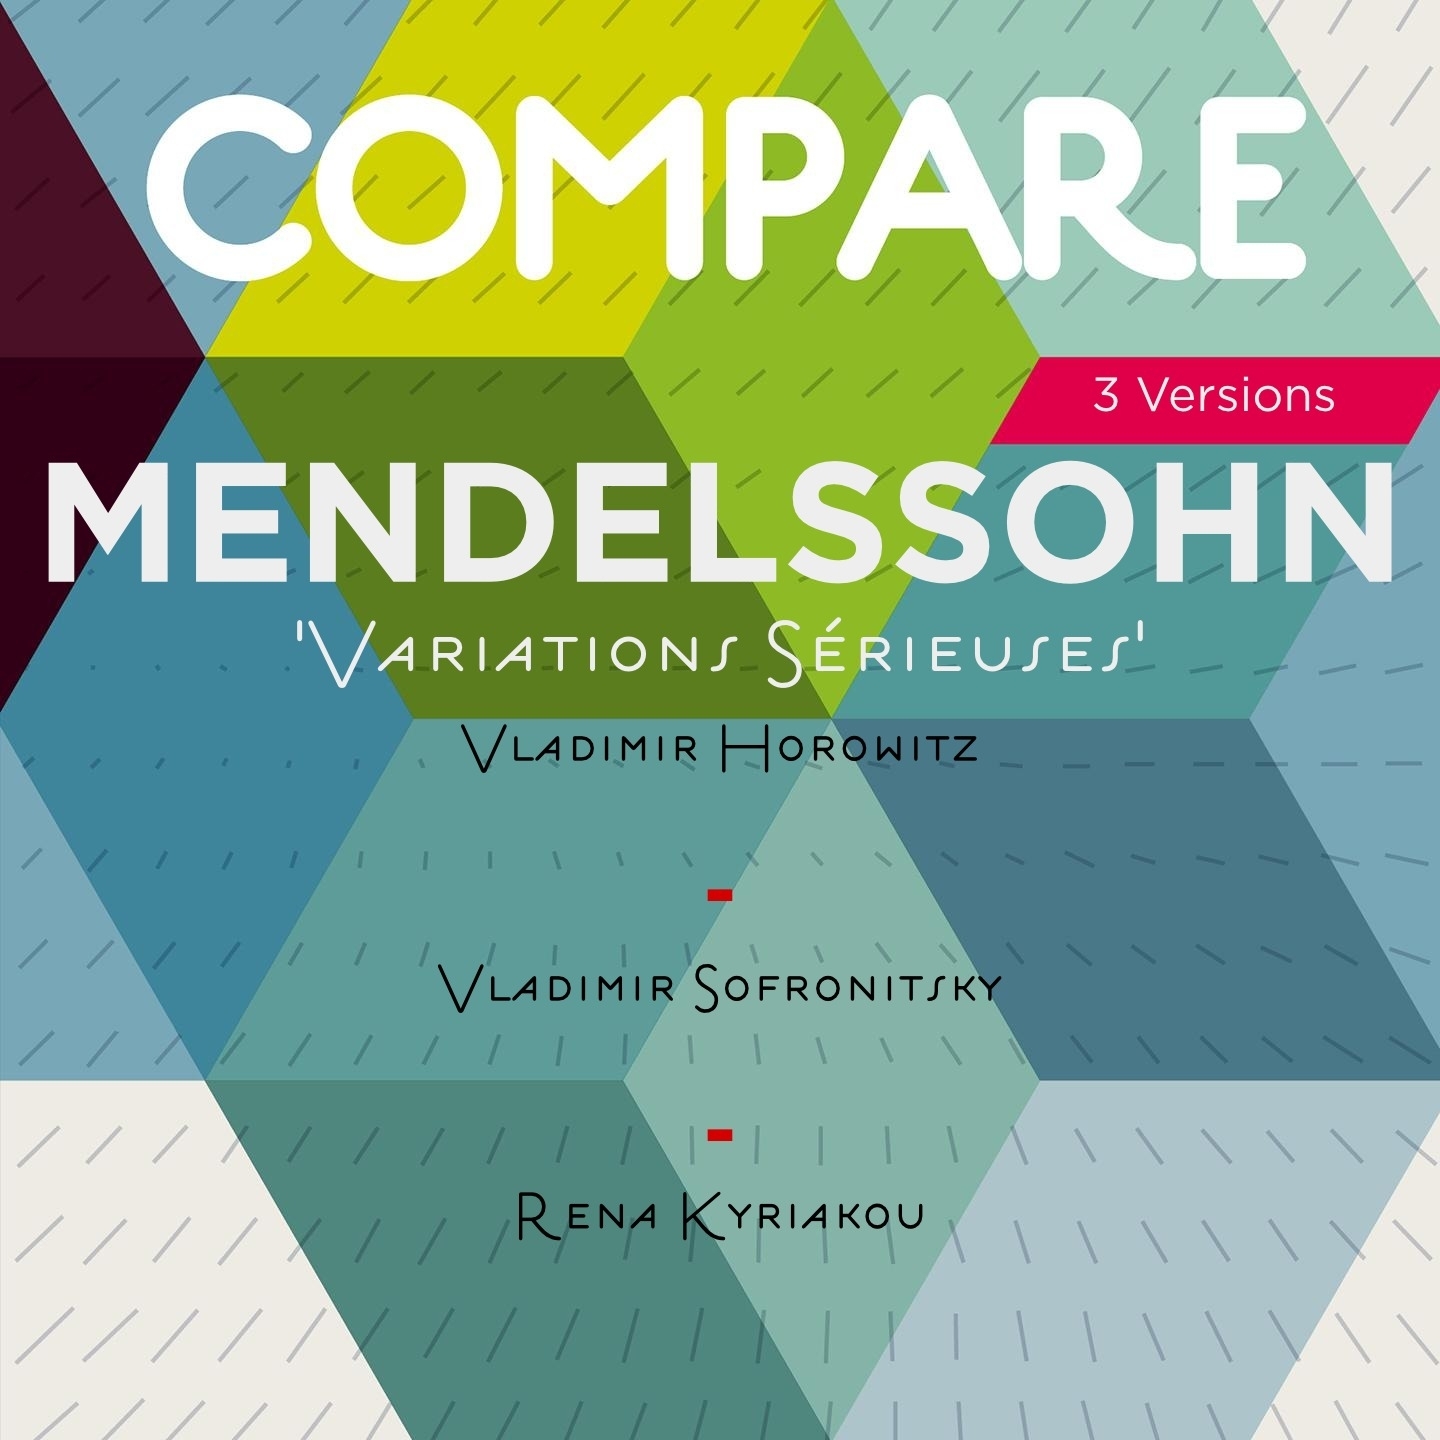 Mendelssohn: Variations se rieuses, Op. 54, Vladimir Horowitz vs. Vladimir Sofronitsky vs. Rena Kyriakou